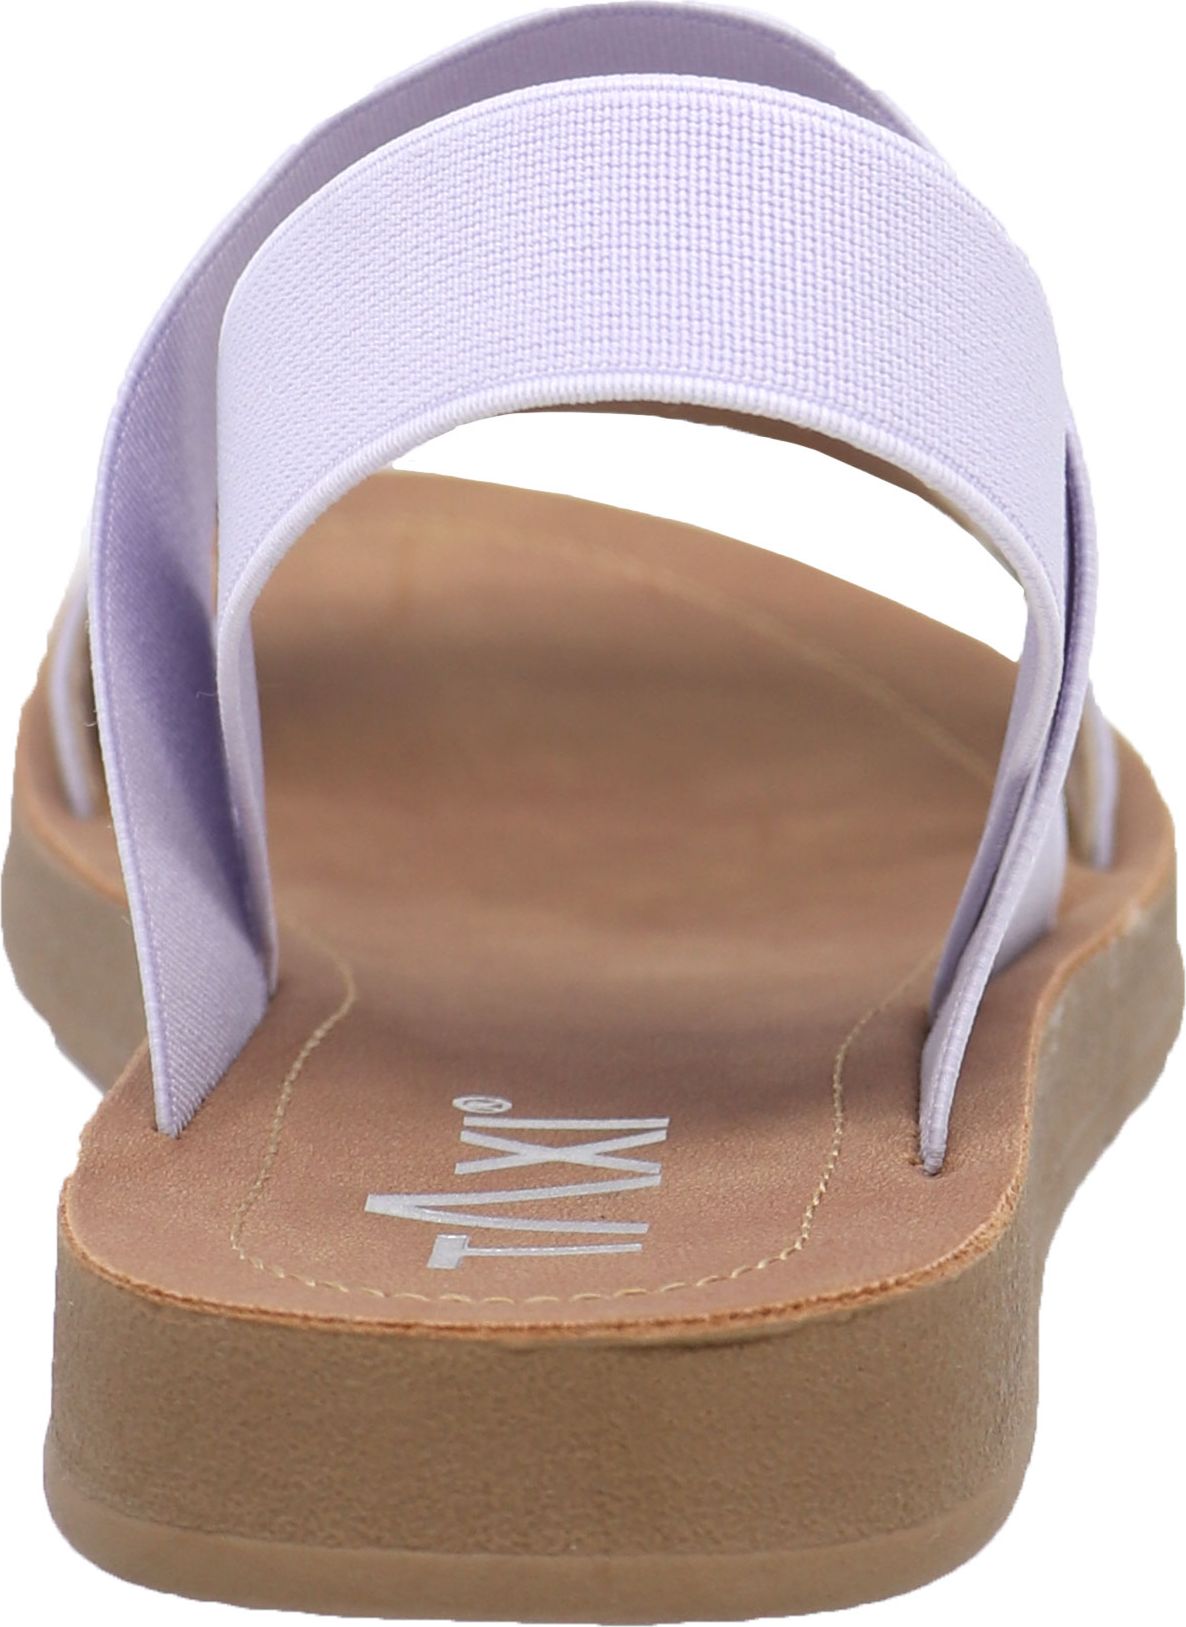 Taxi Sandals Remi02 Lilac